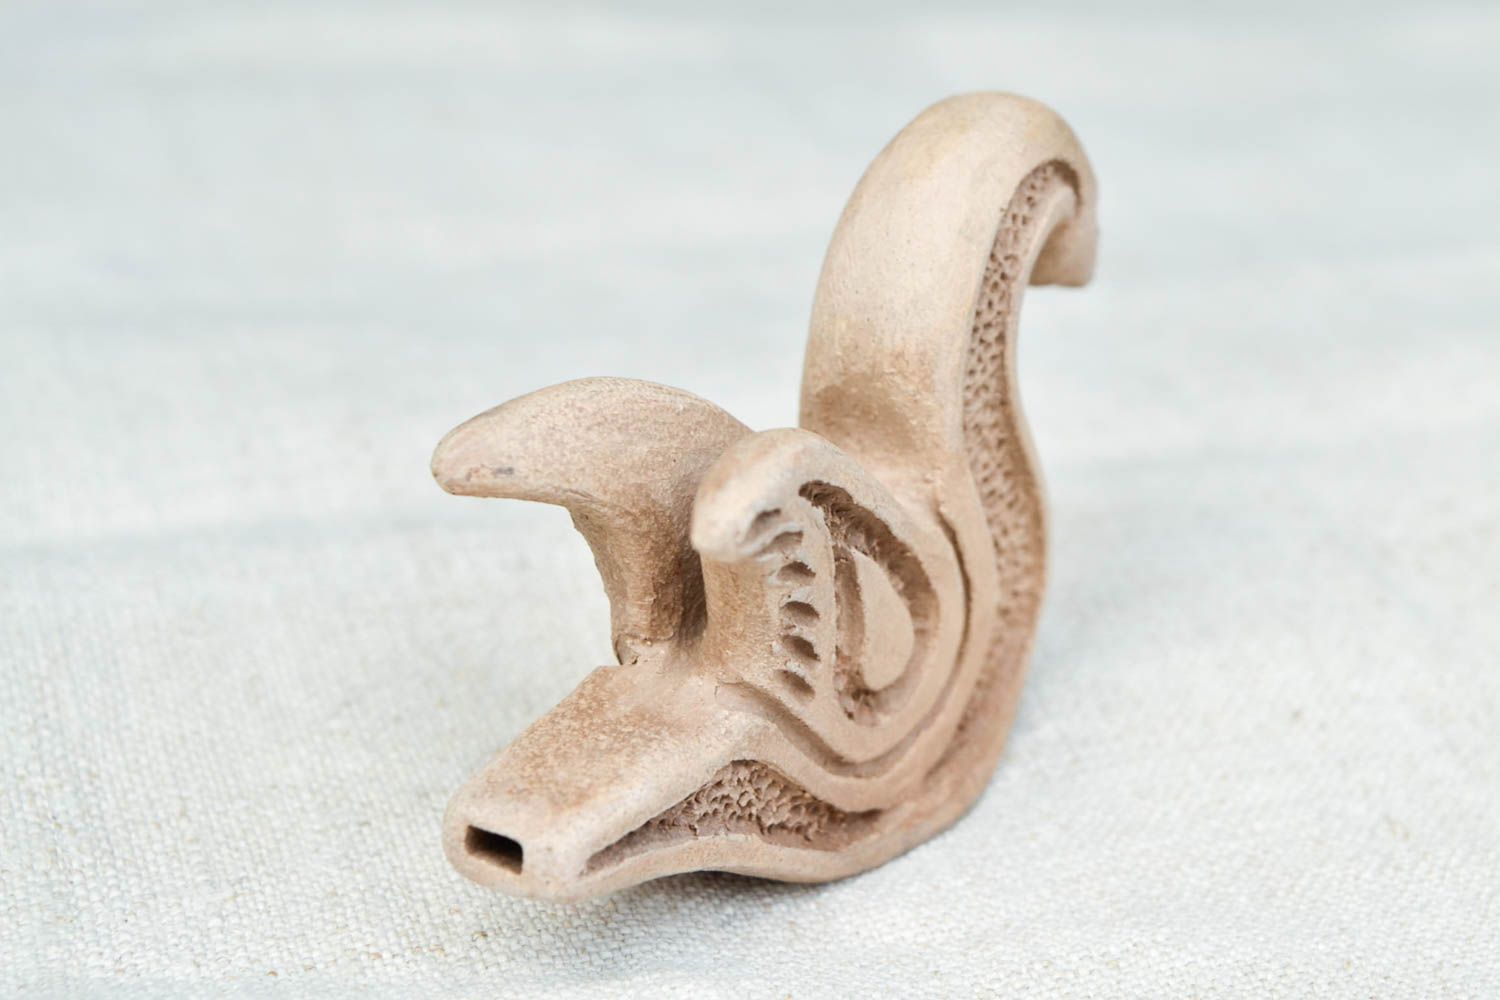 Handmade ceramic penny whistle clay figurine modern sculpture art gift ideas photo 5